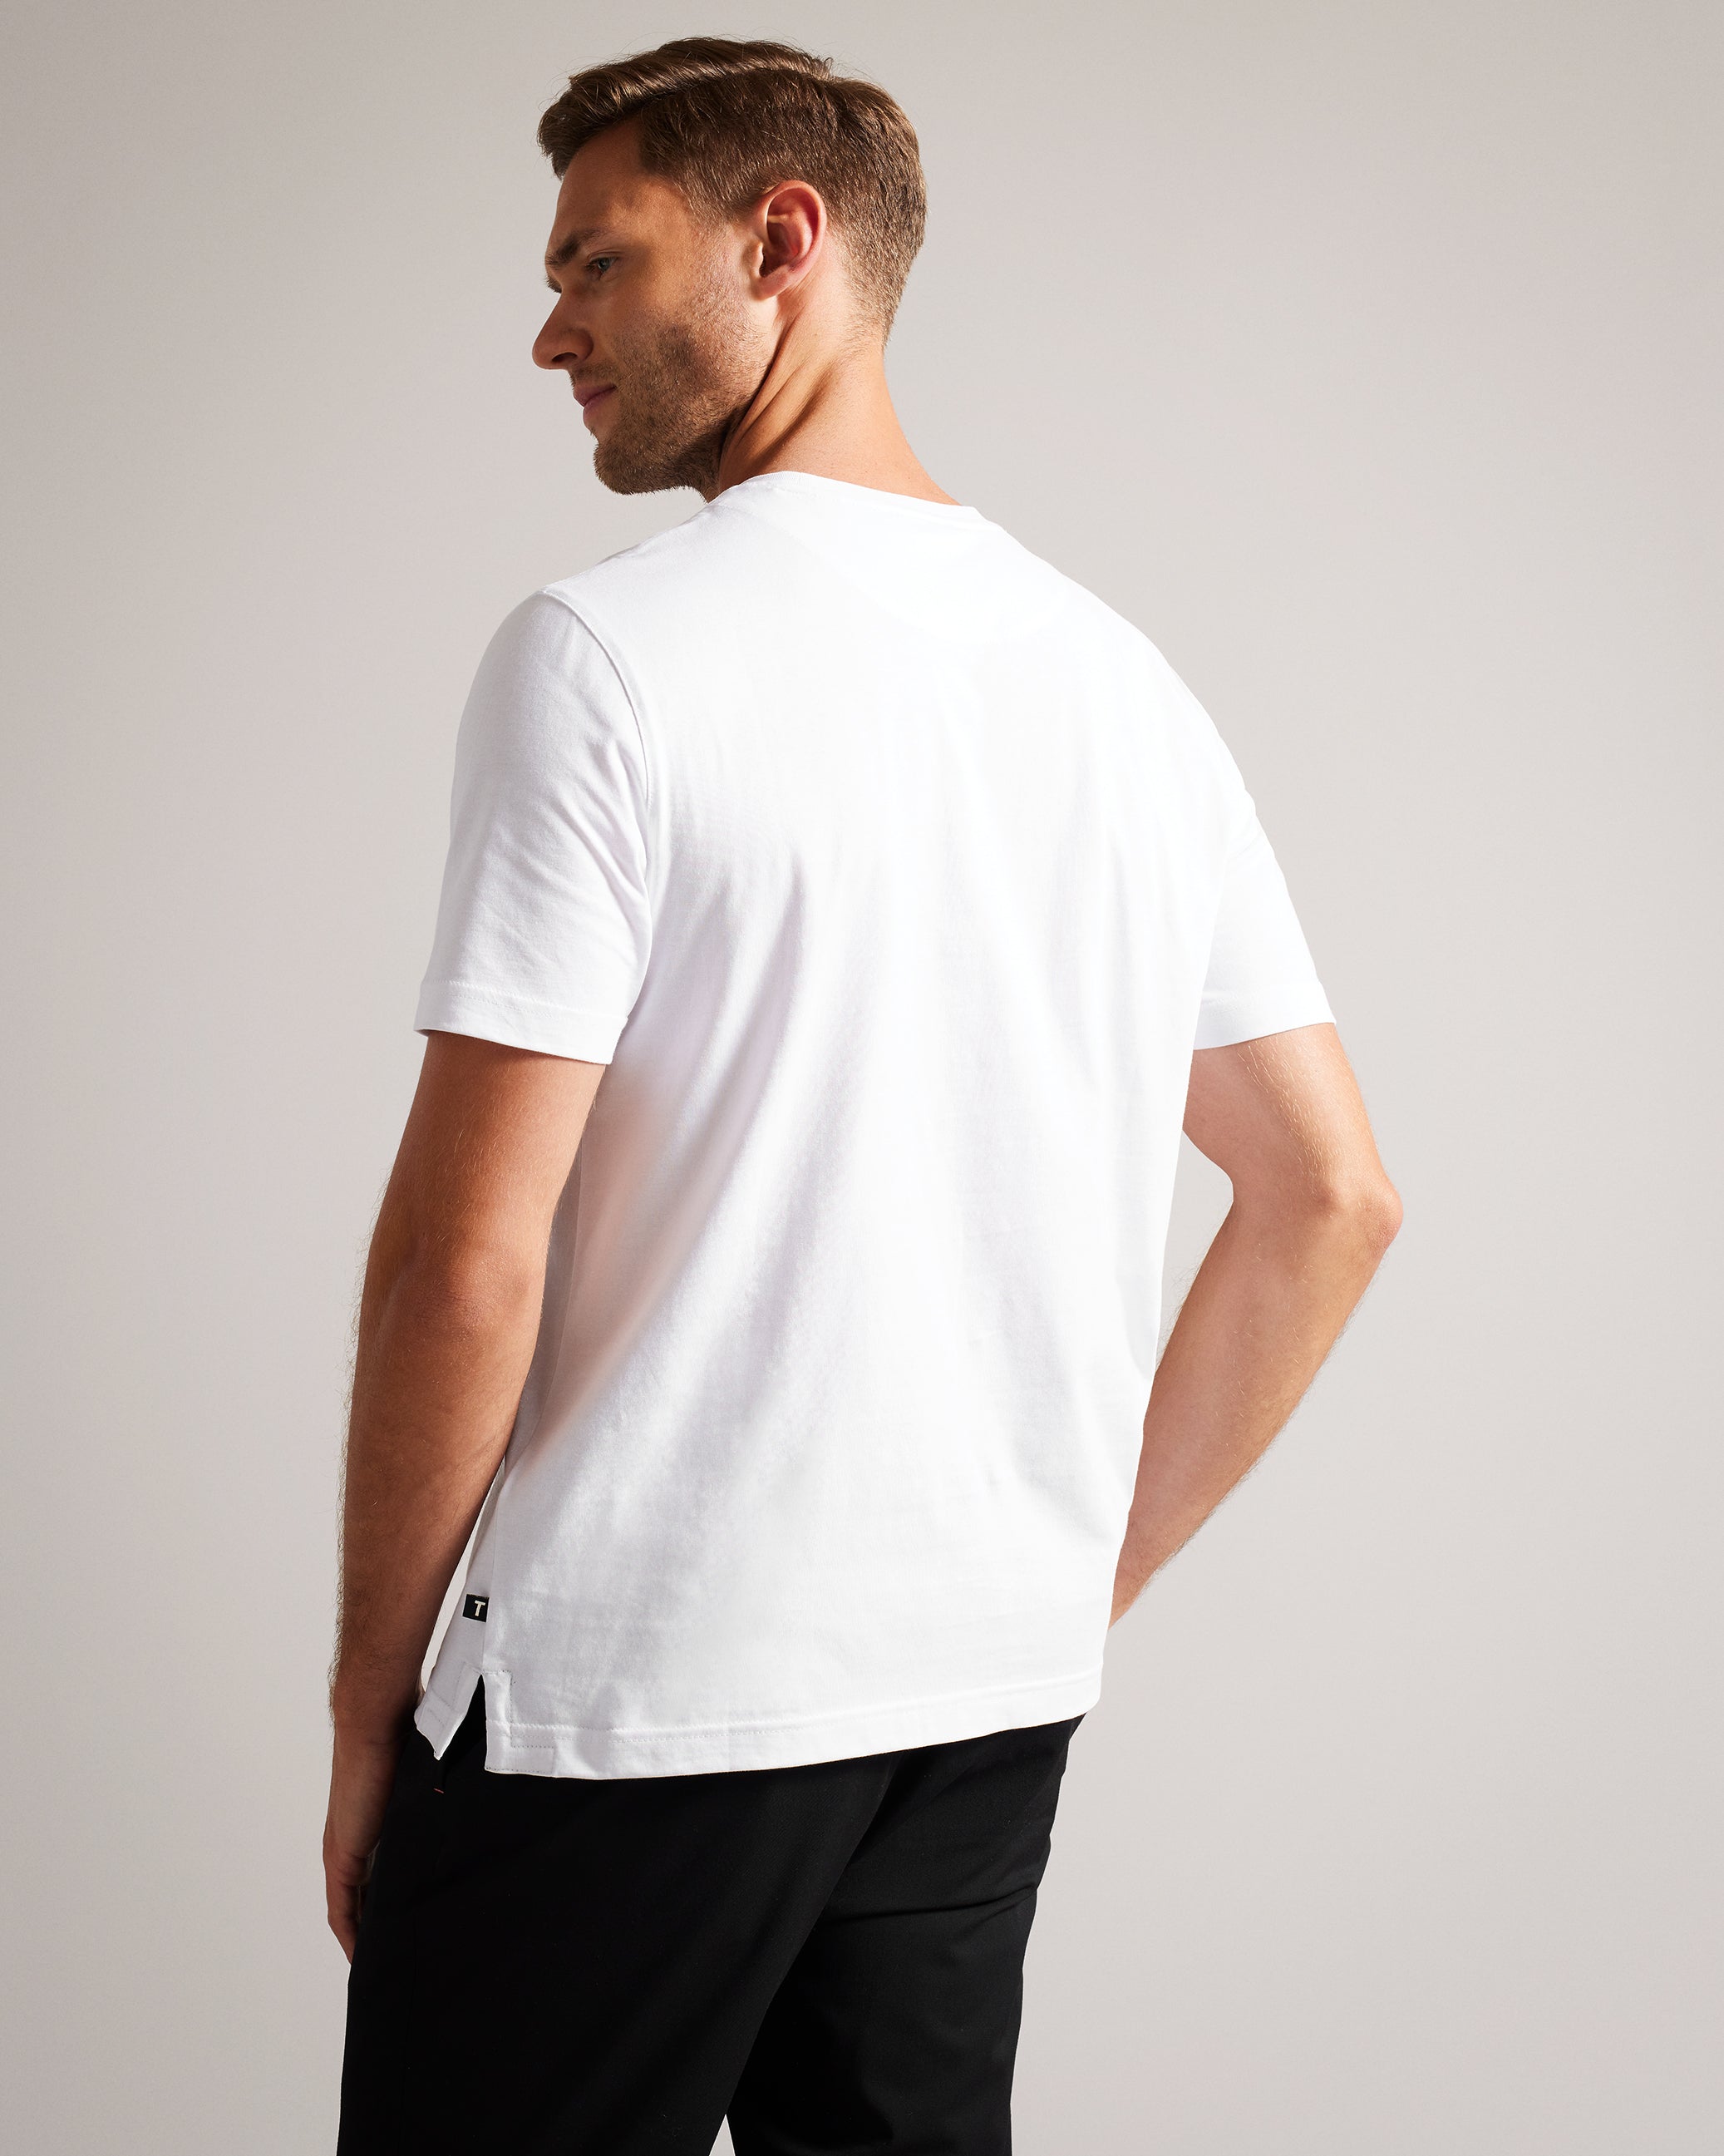 Rofata Short Sleeve Square Logo Graphic T-Shirt White